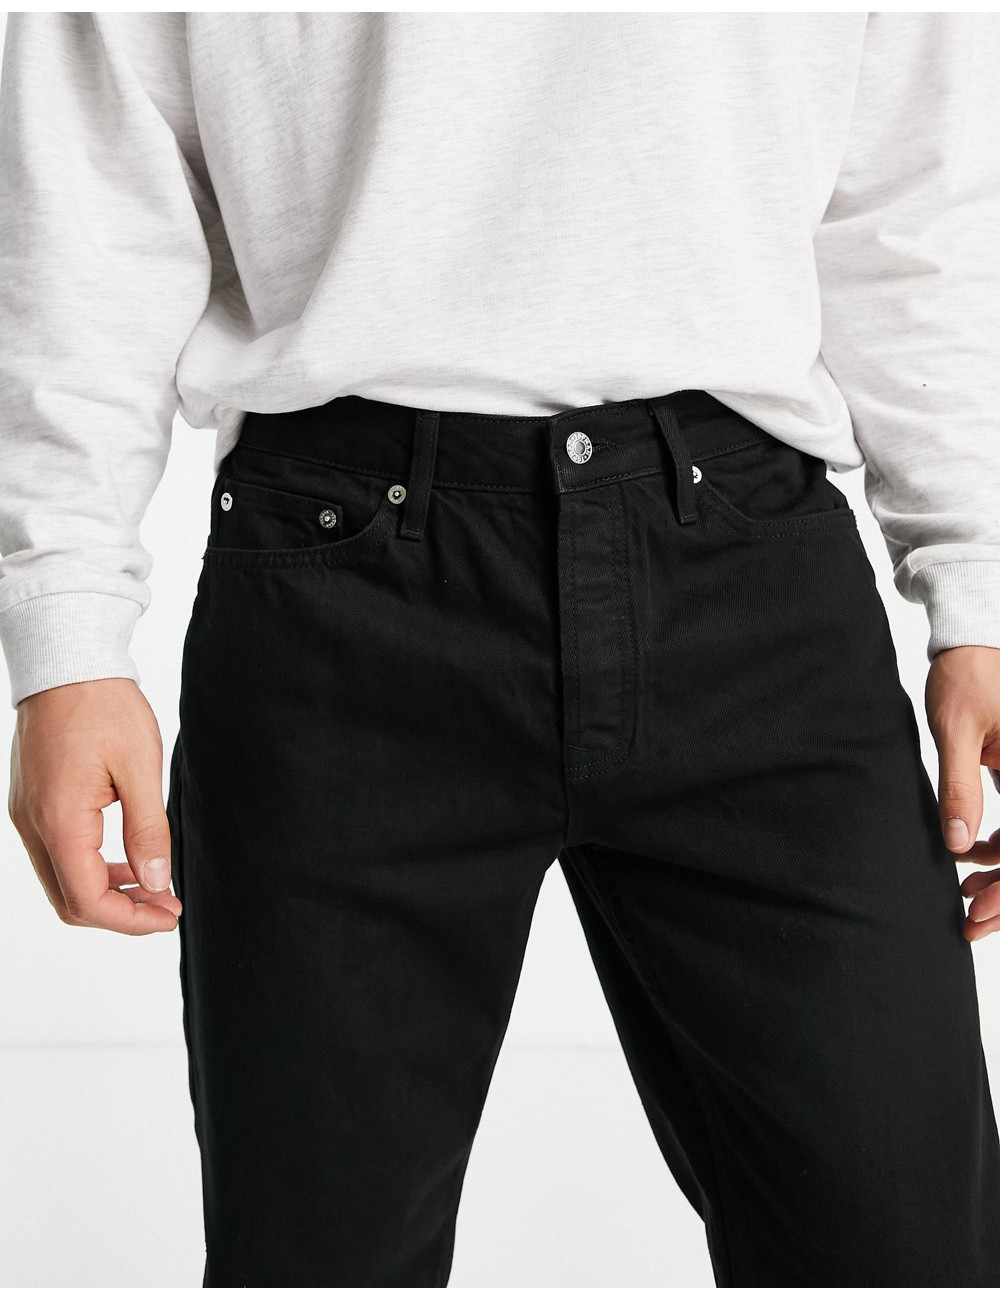 Topman relaxed jeans in black